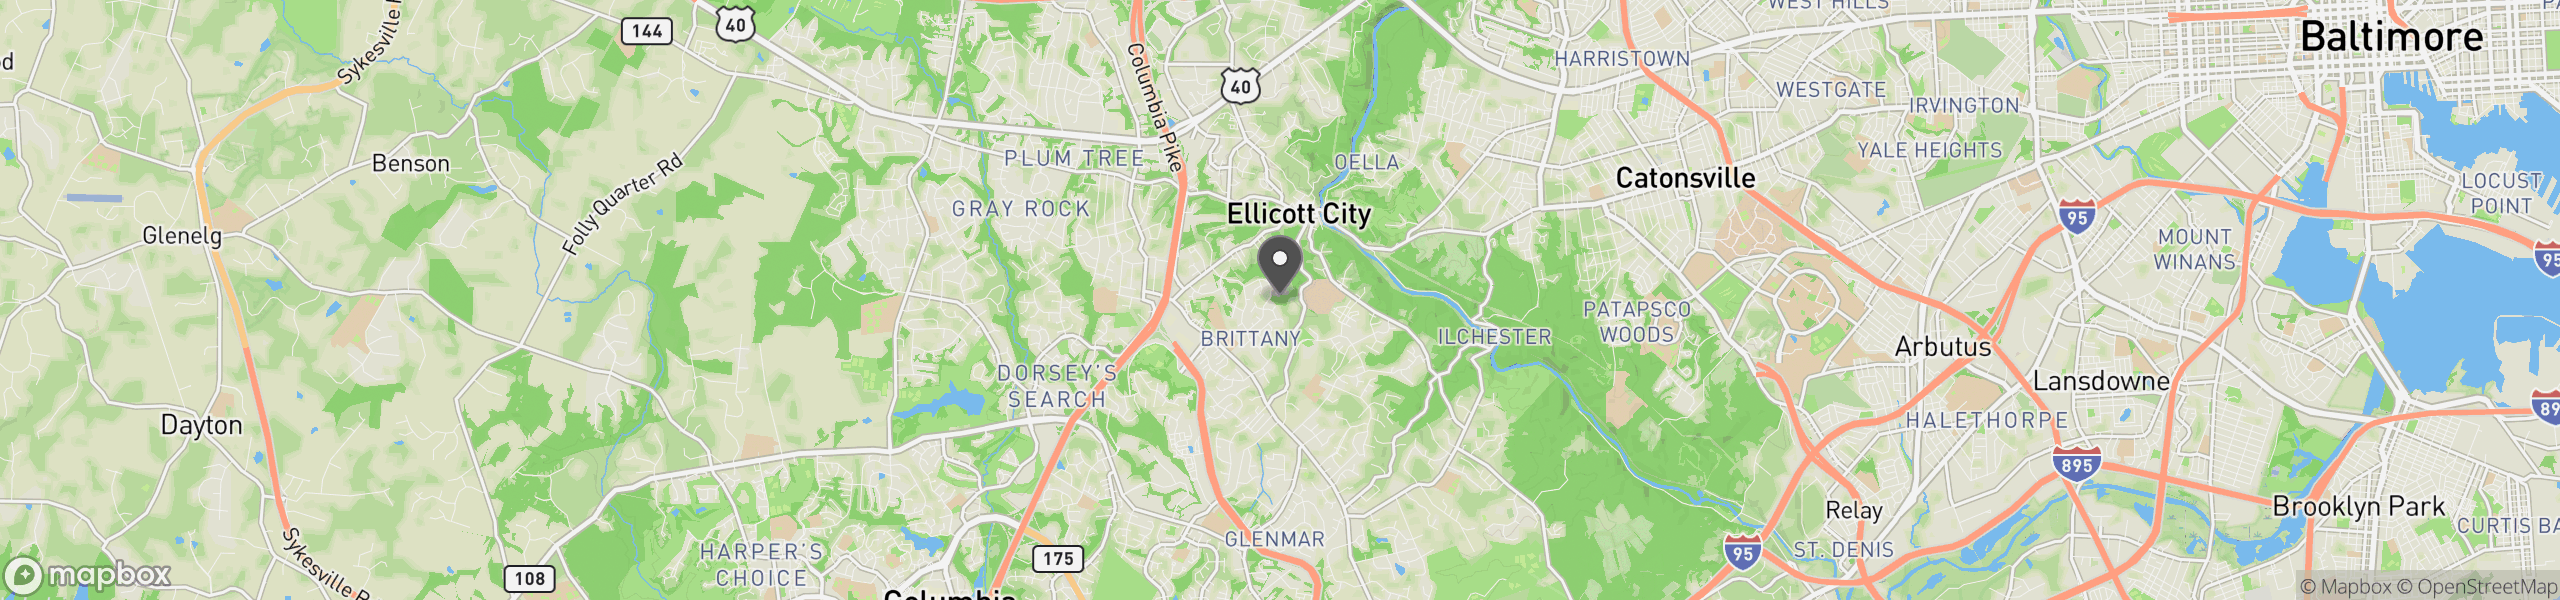 Ellicott City, MD 21043